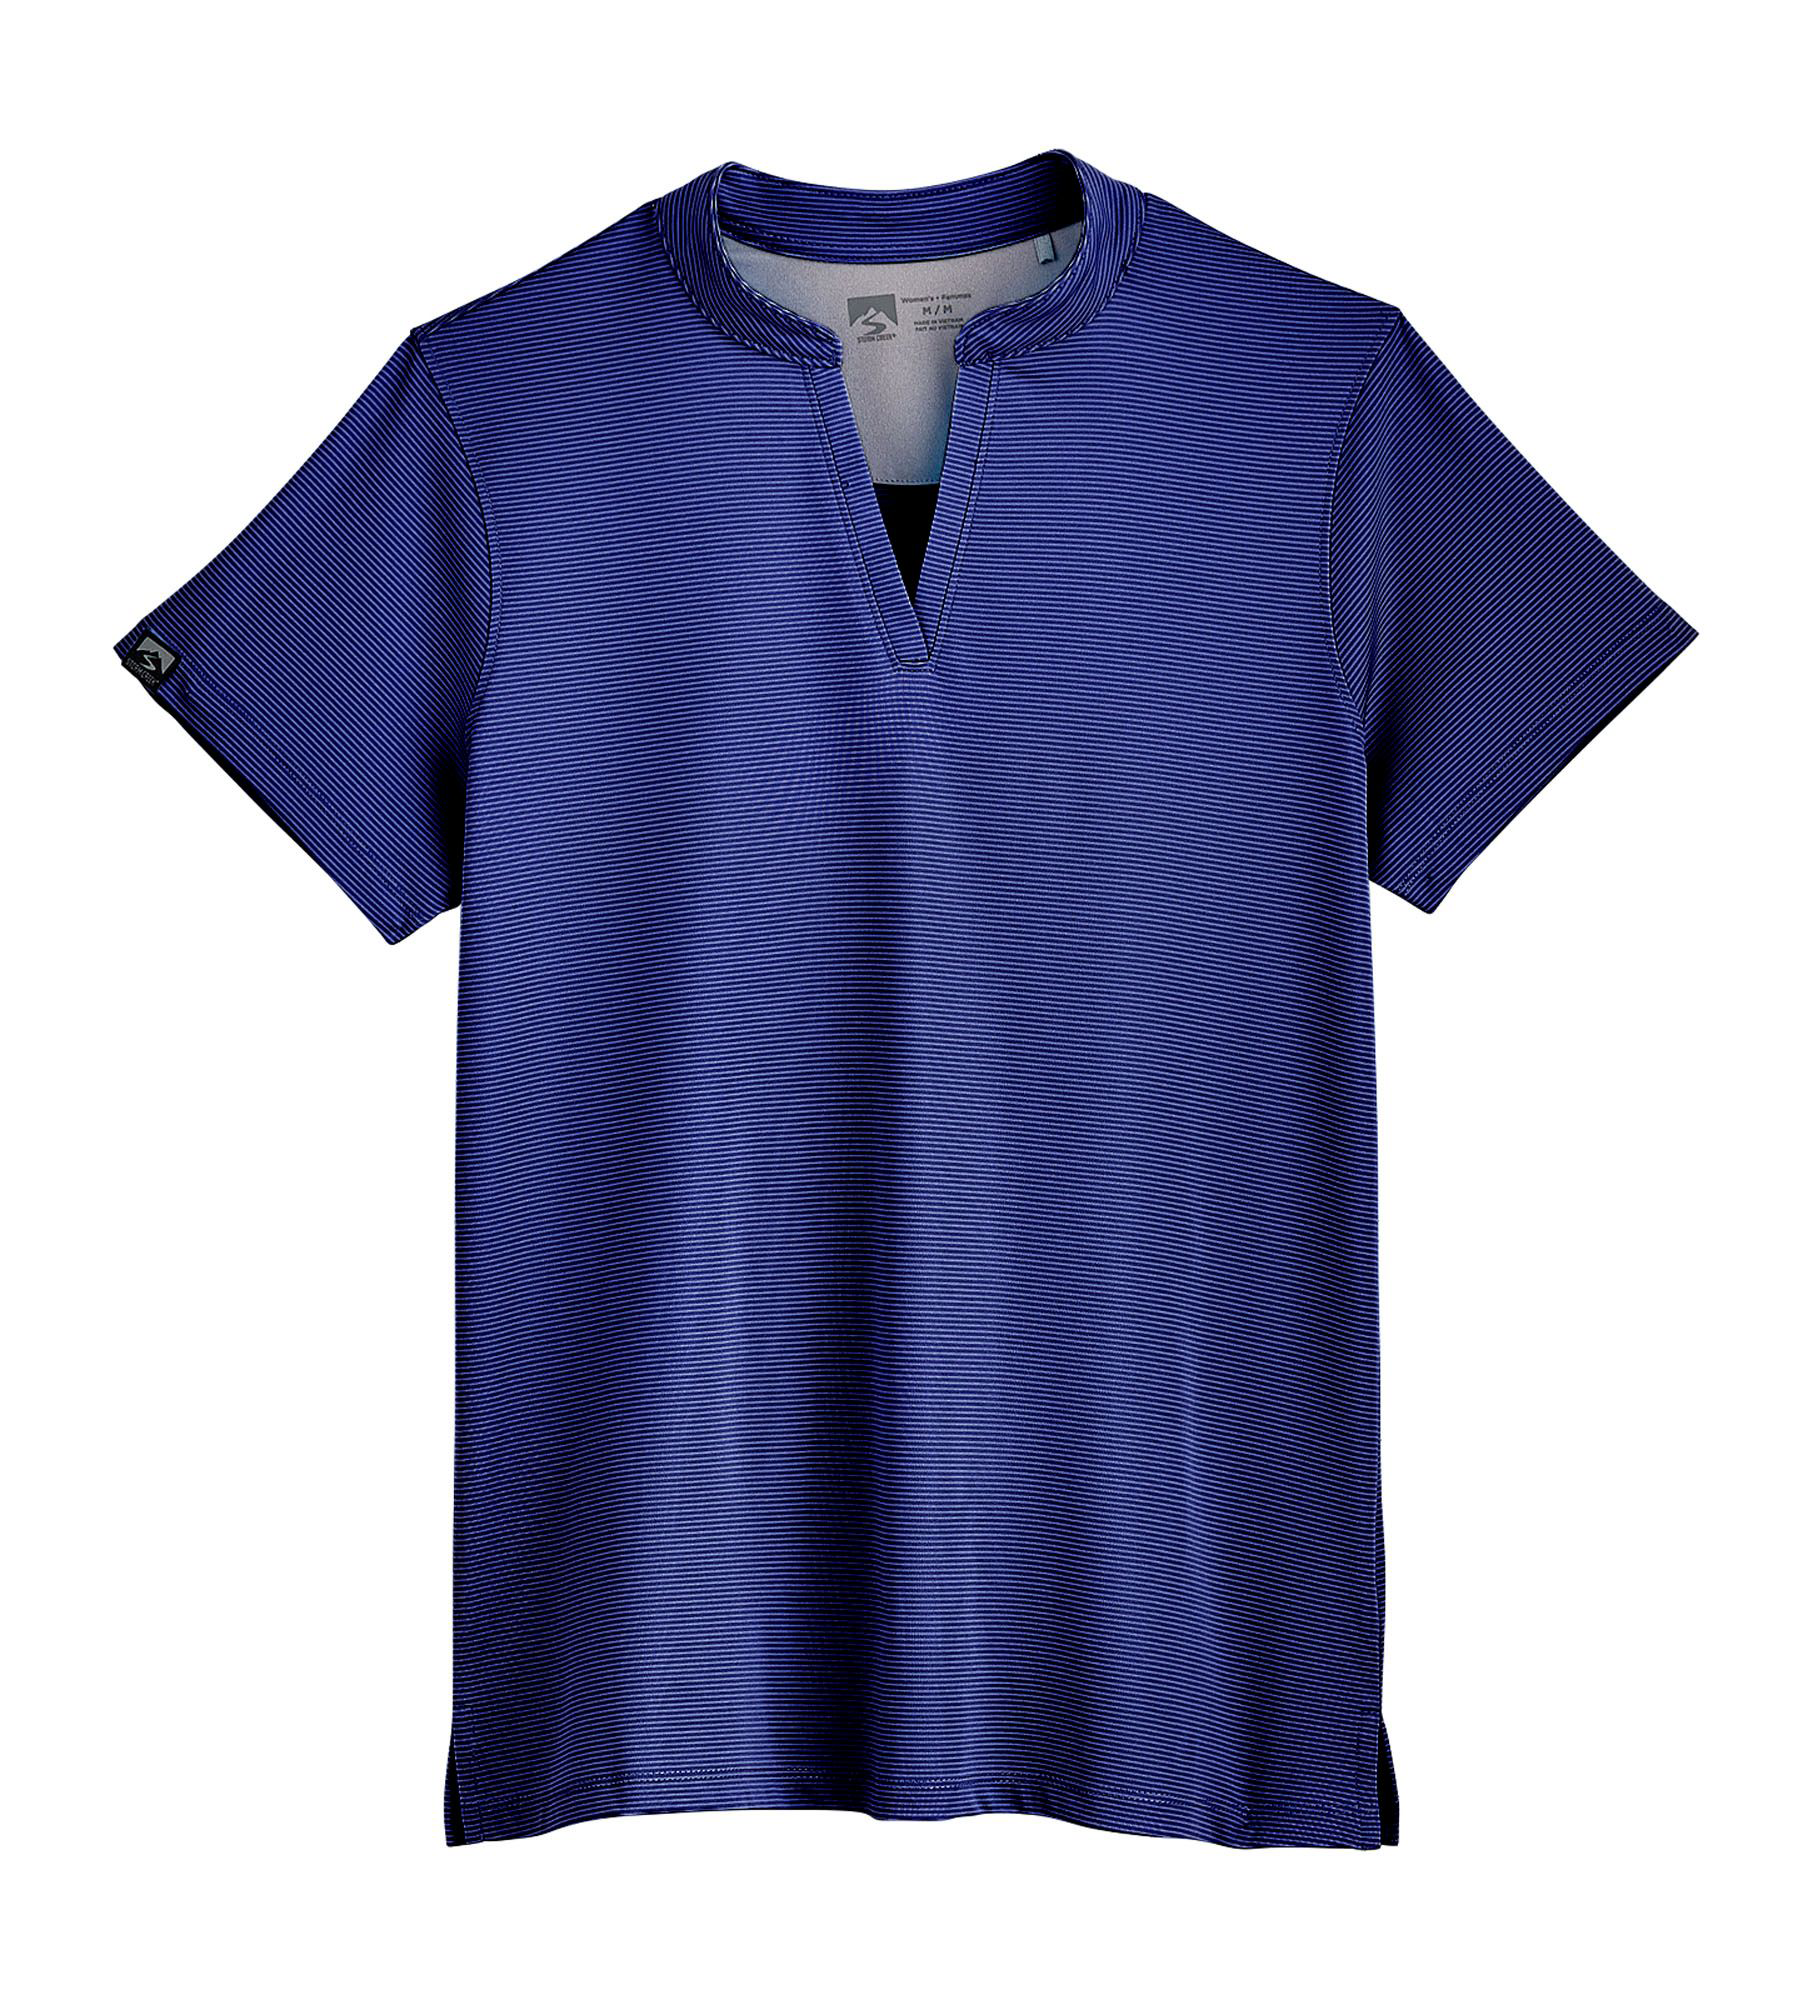 Storm Creek Optimist Short-Sleeve Polo Shirt for Ladies - Navy - M